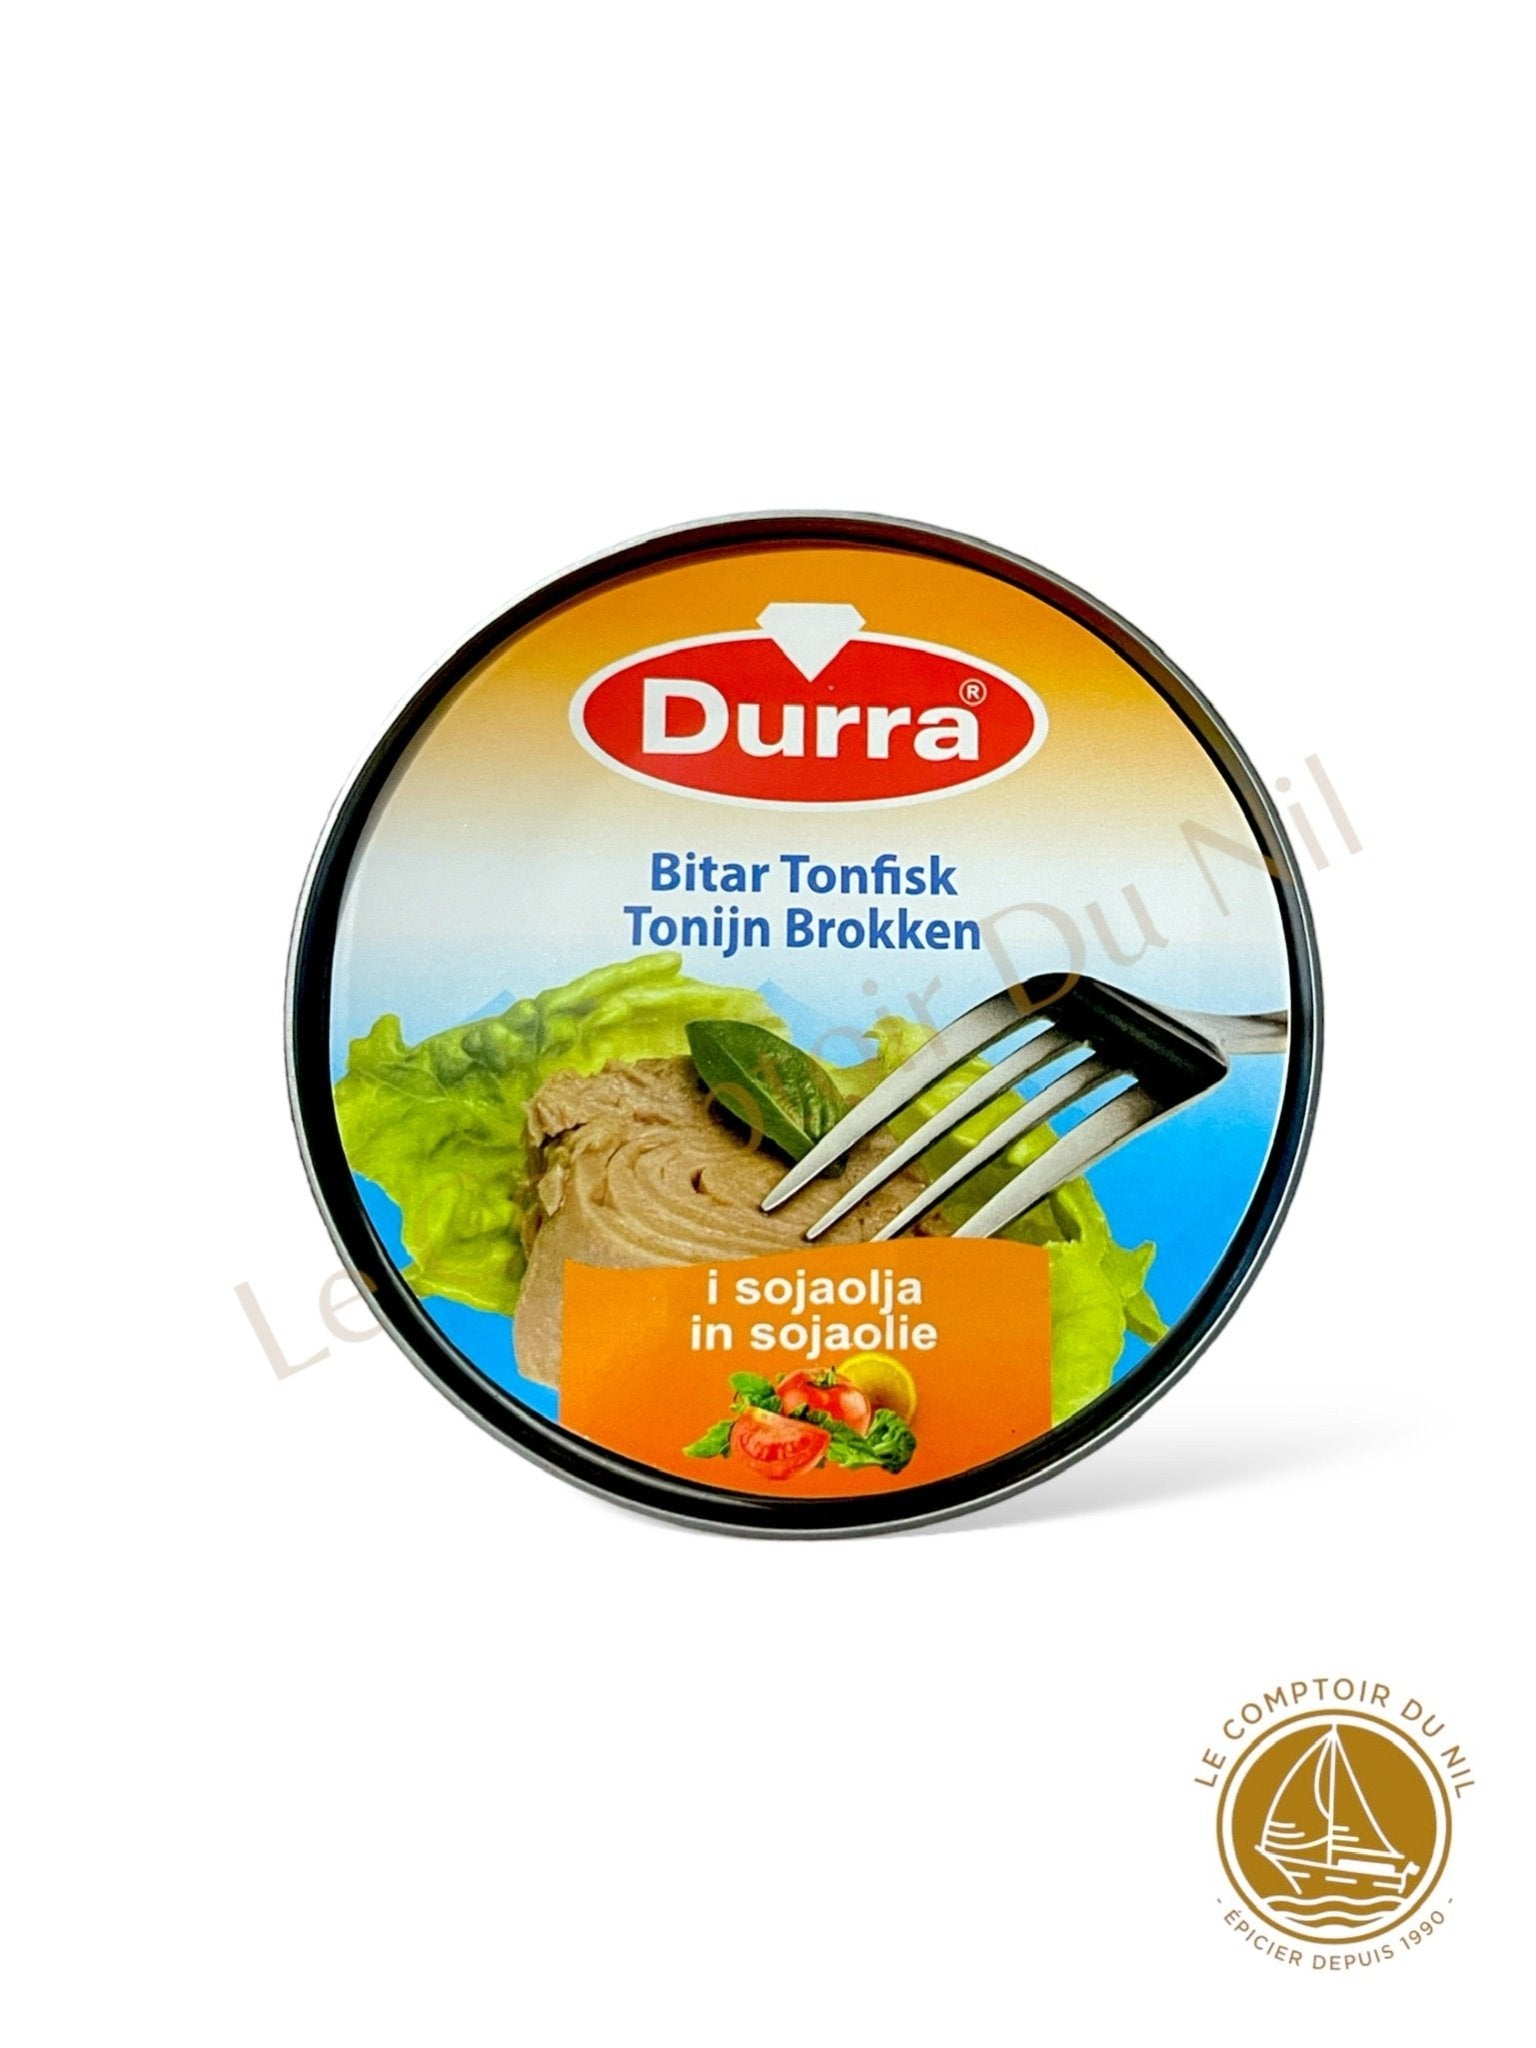 Durra - Bitar tonfisk Thon à l'huile de soja